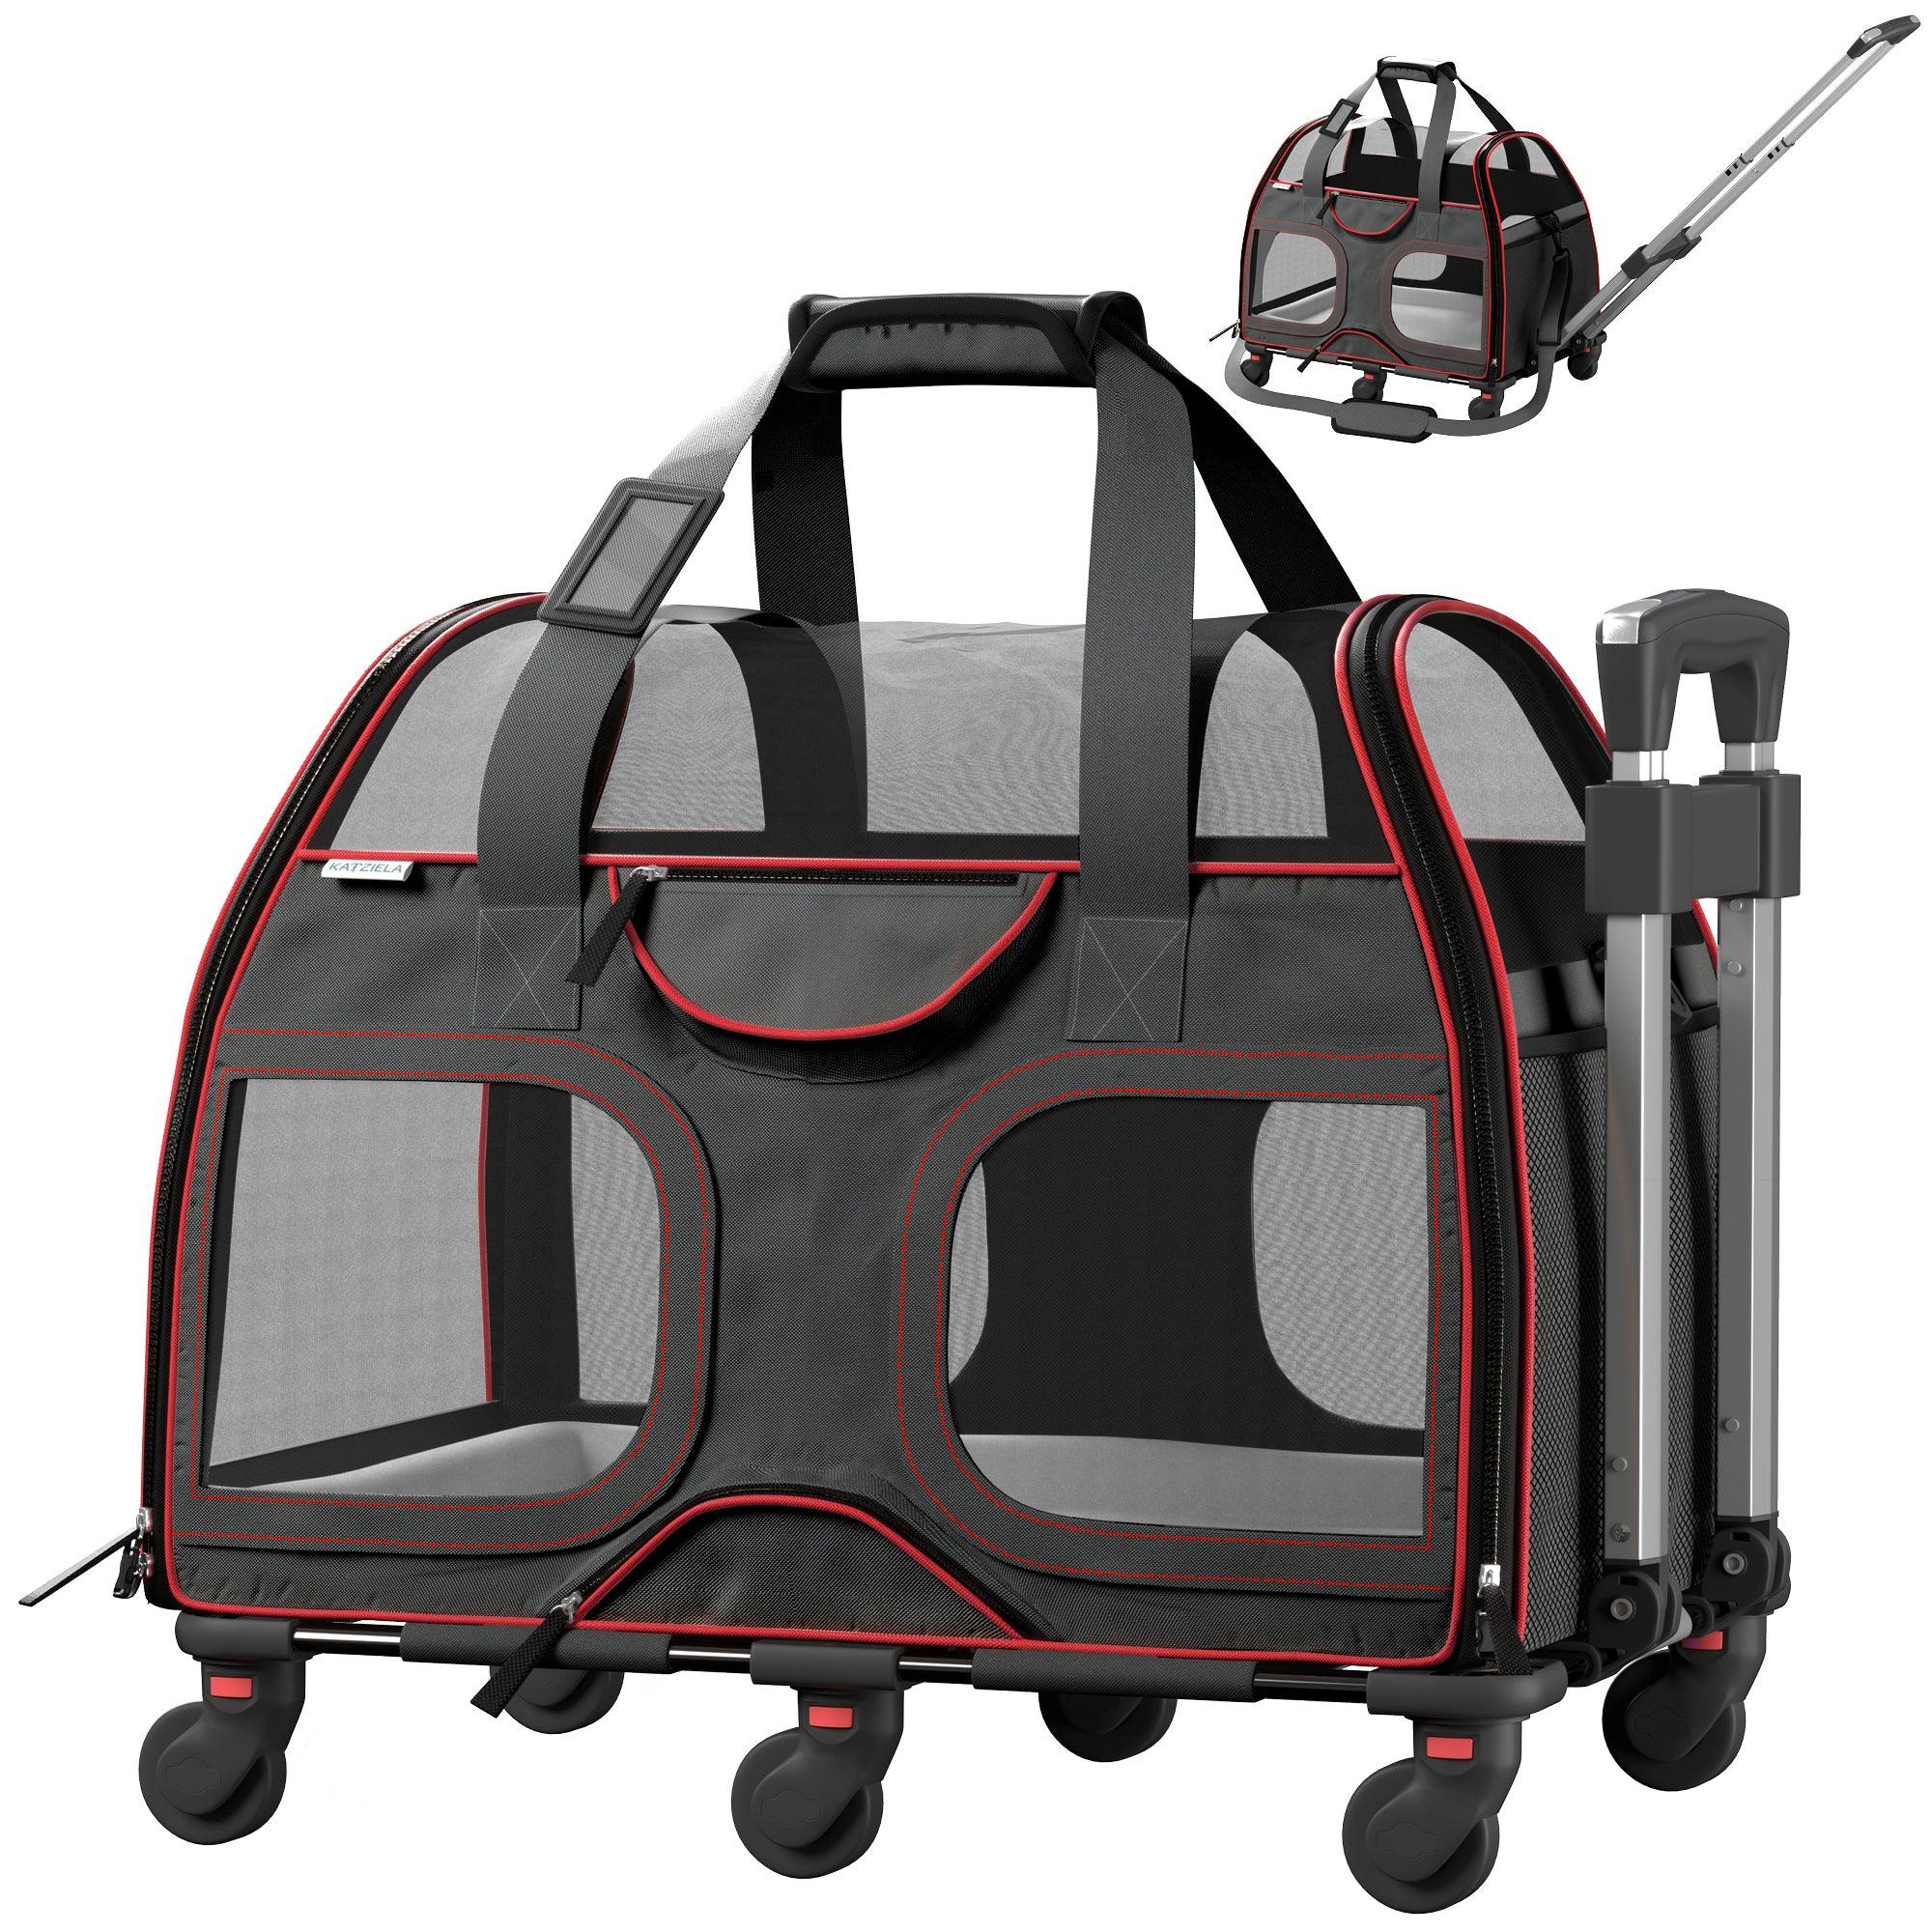 Luxury Designer Pet Cat Dog Carrier Handbag Travel Portable